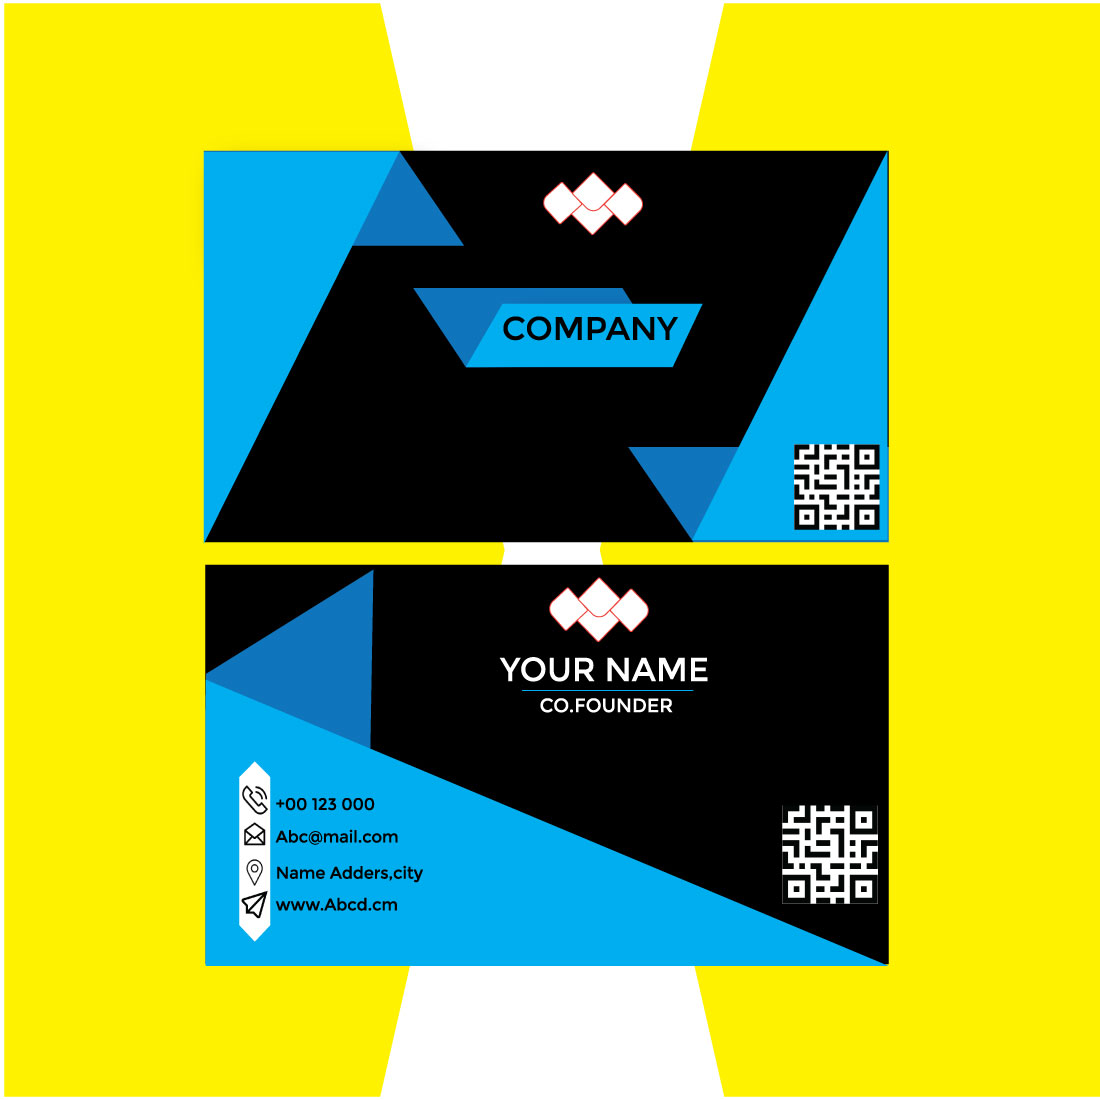 Professional Business Card Design pinterest image.